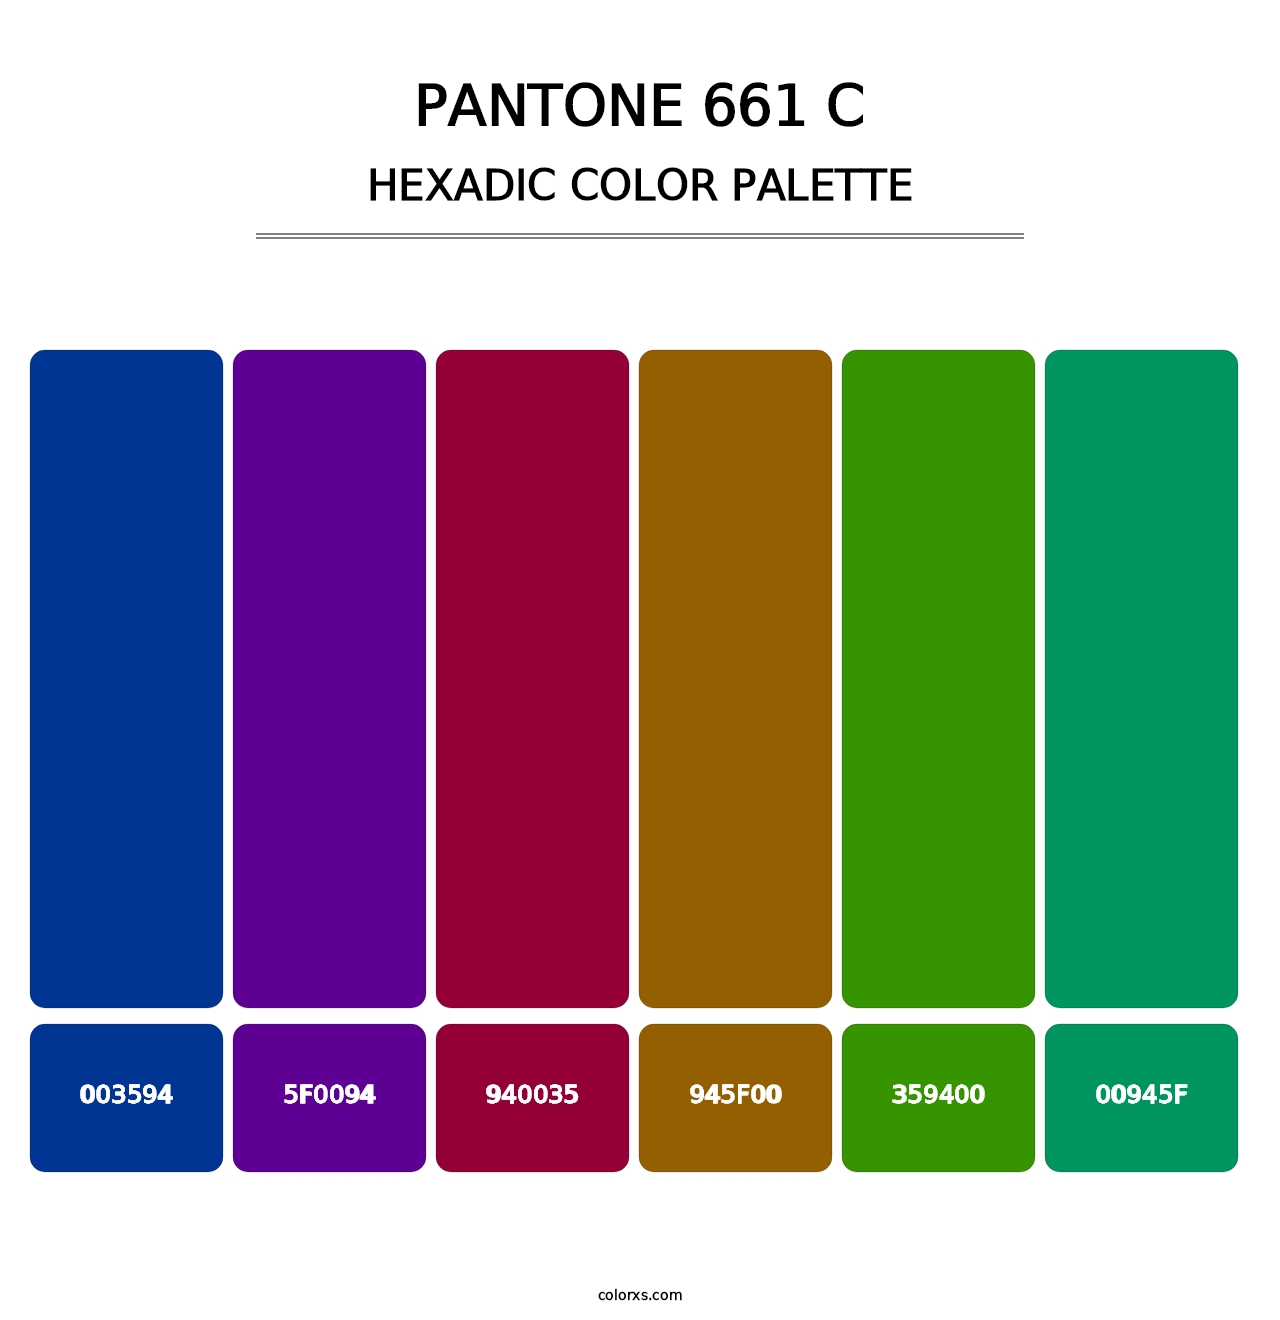 PANTONE 661 C - Hexadic Color Palette